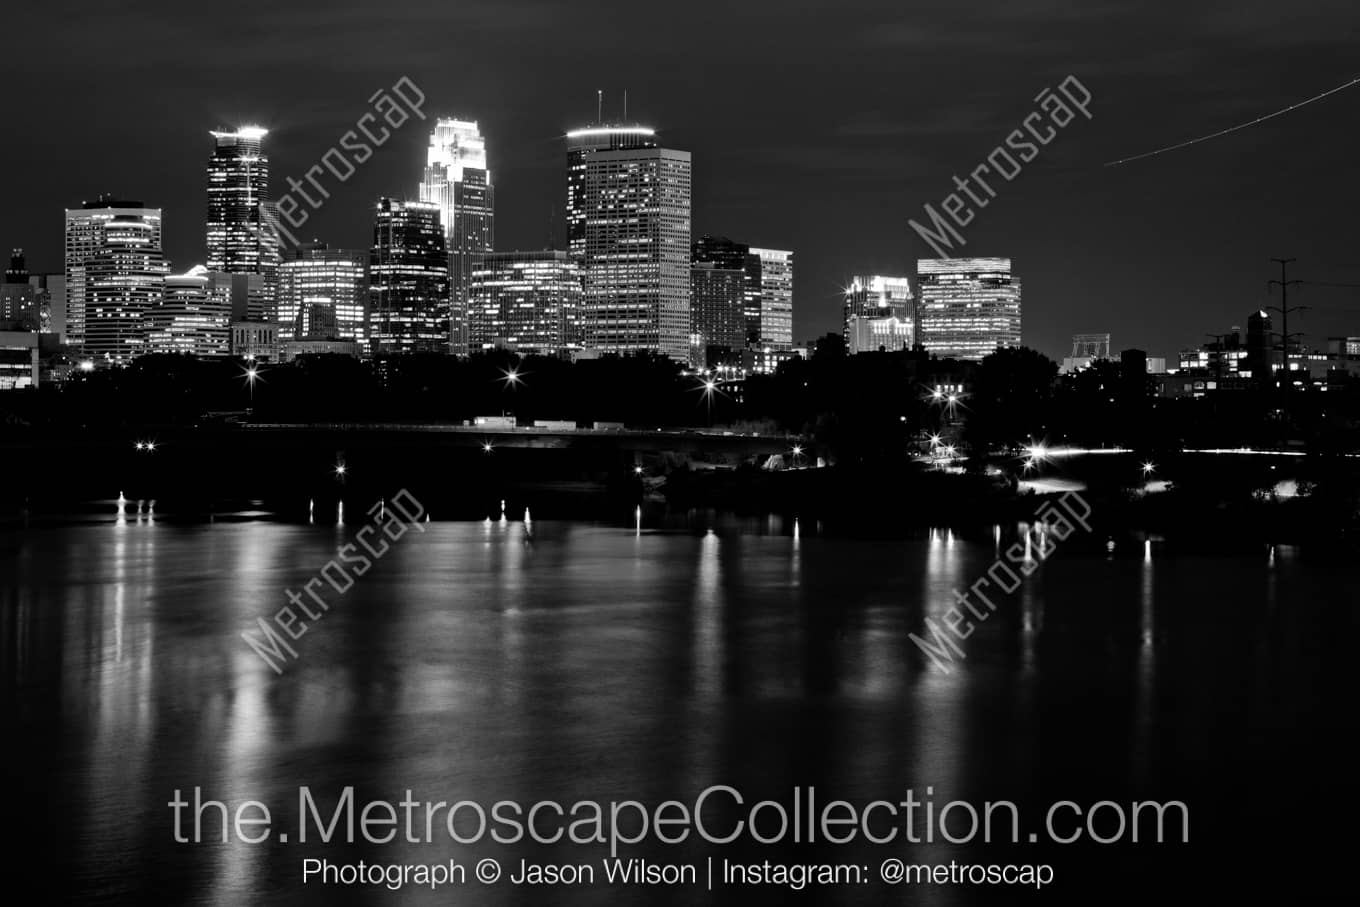 Minneapolis Minnesota Picture at Night